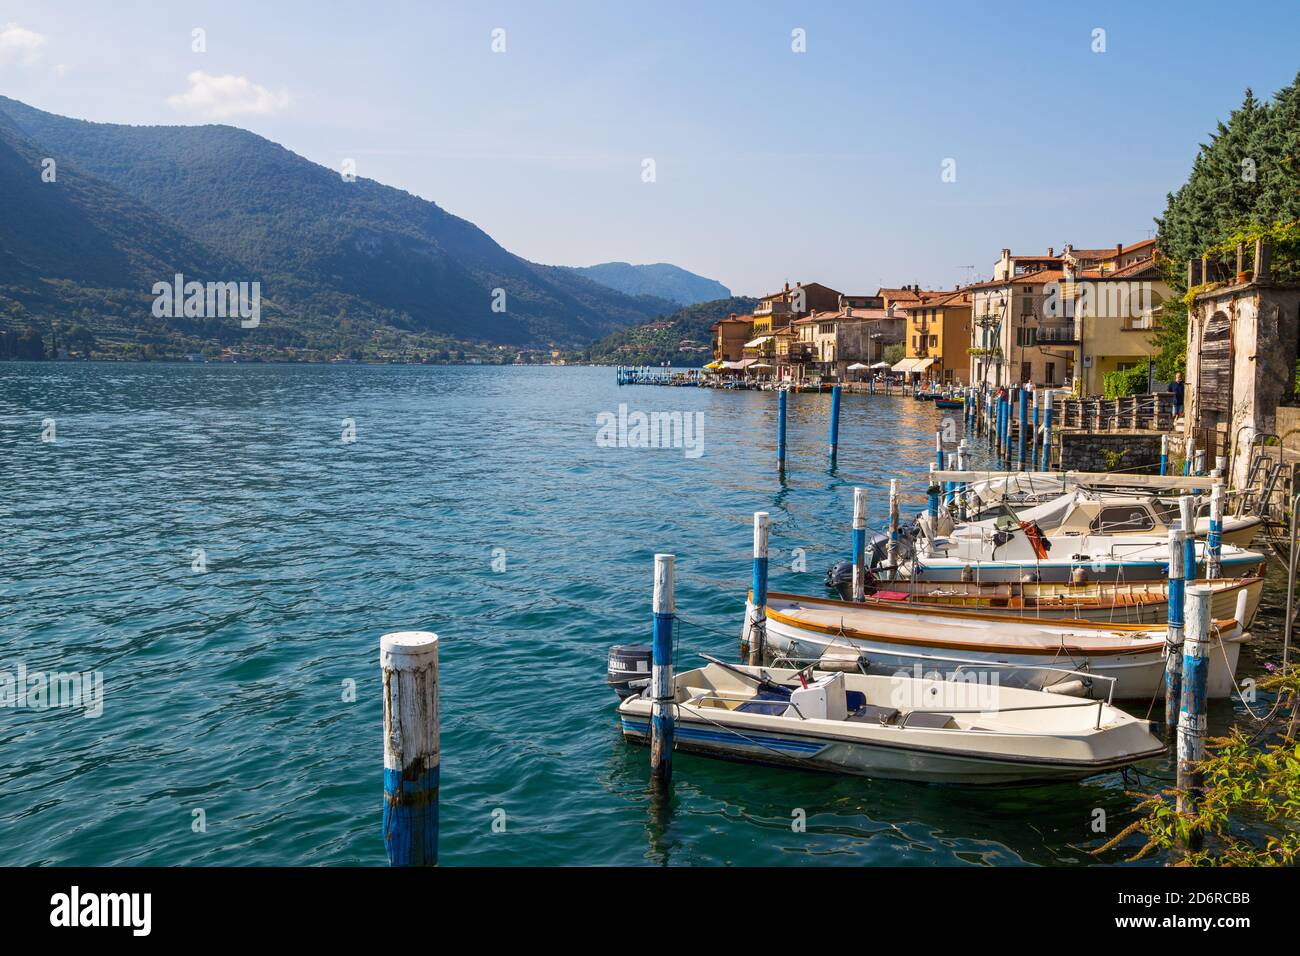 Vista de Monte Isola, Lago Iseo, provincia de Brescia, Lombardía, Italia. Foto de stock